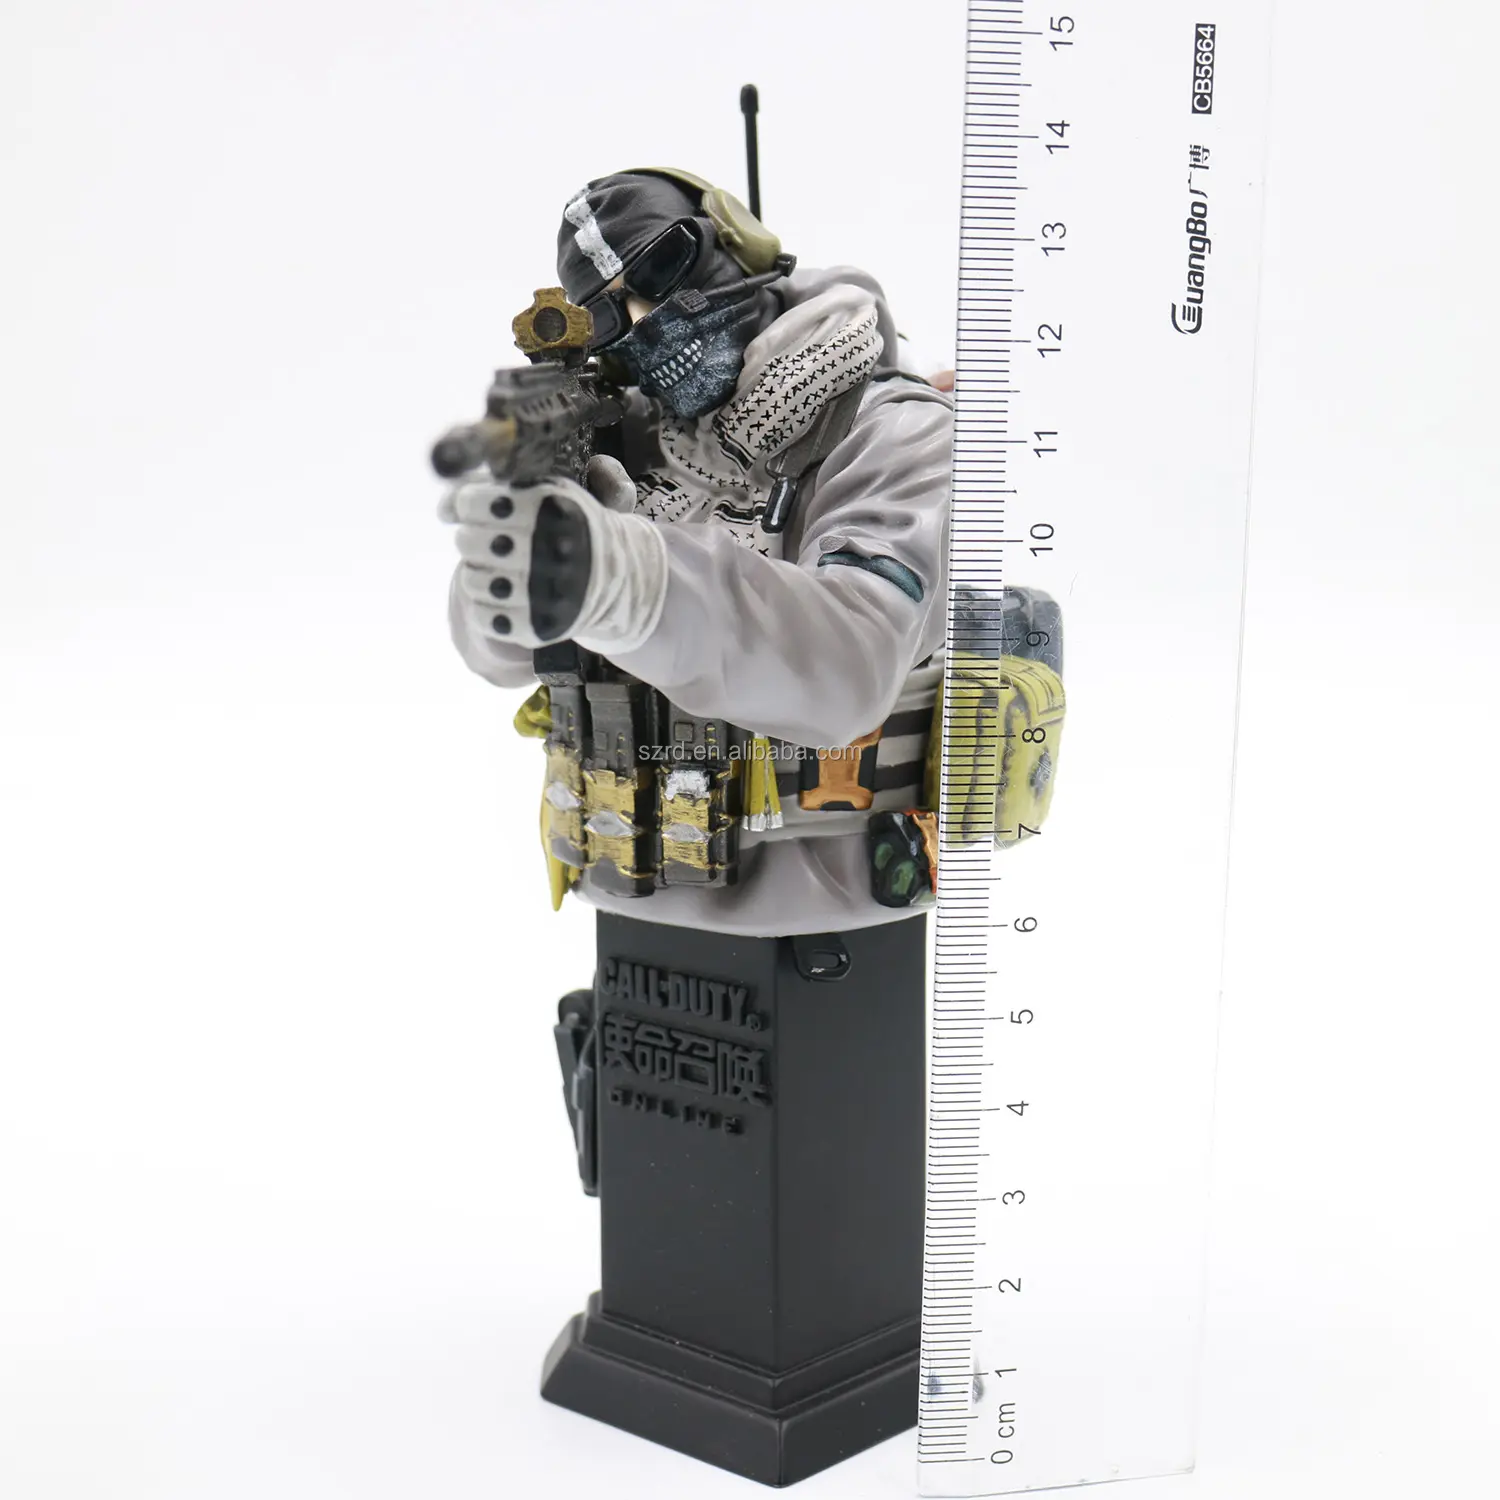 OEM 3D samurai model resin bust statue soldier toy polystone figurine